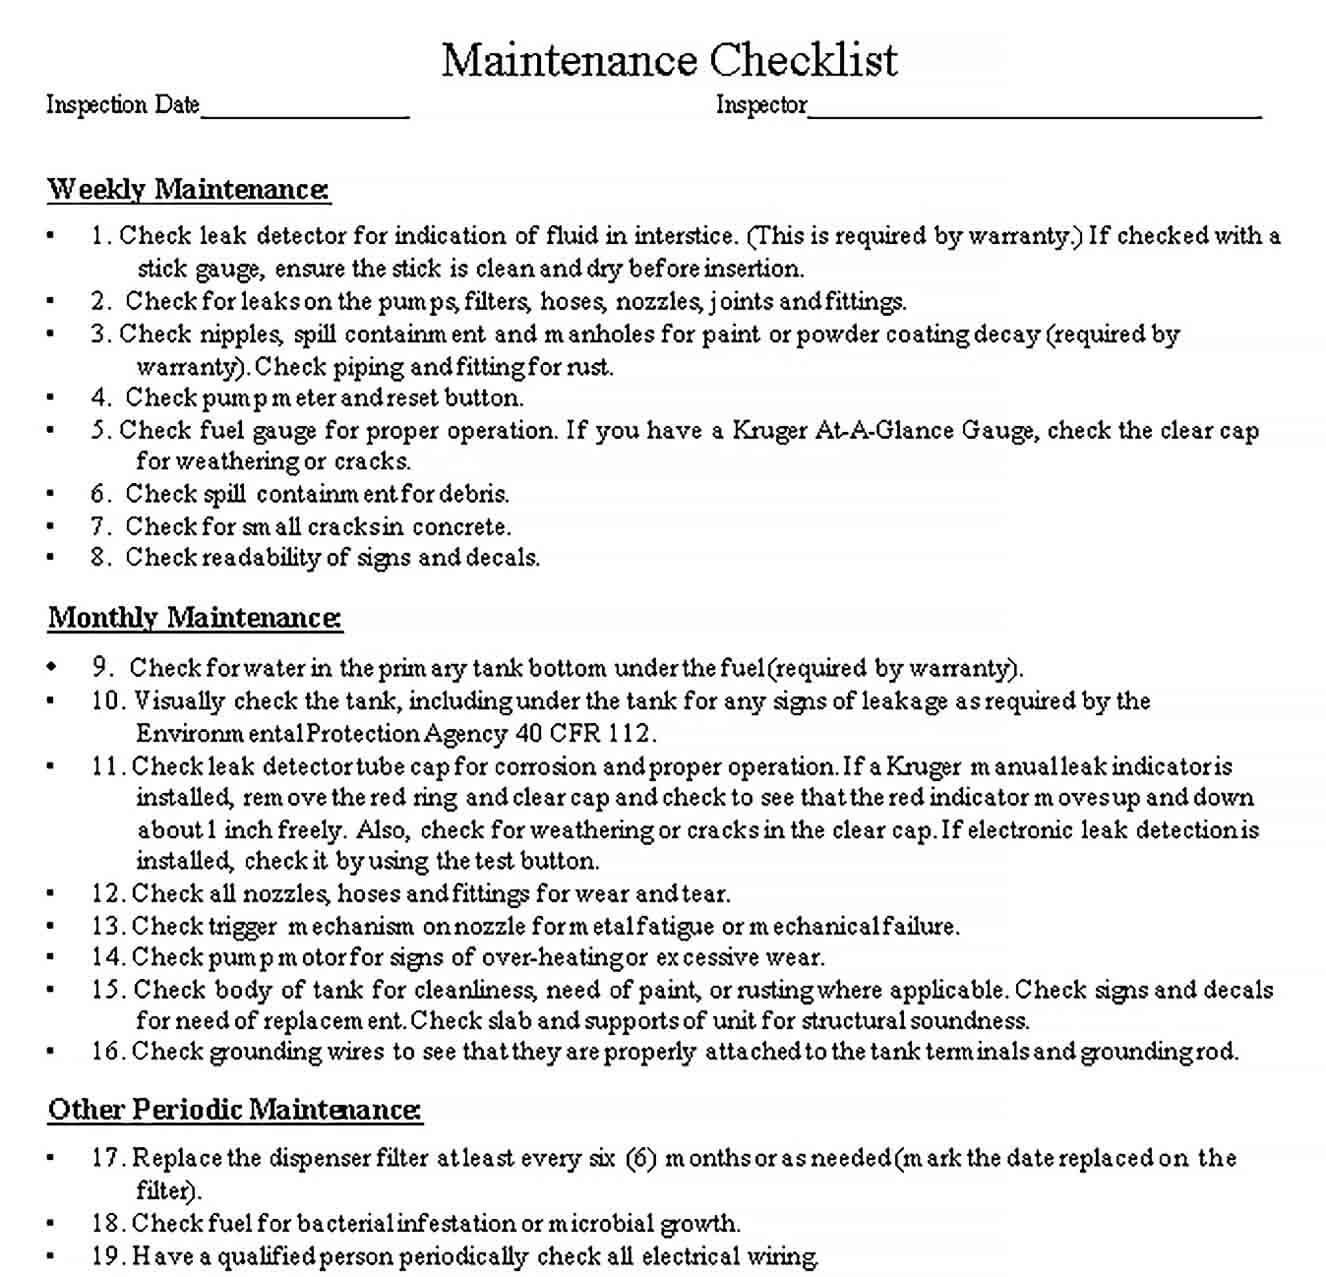 Sample Maintenance Checklist Example.